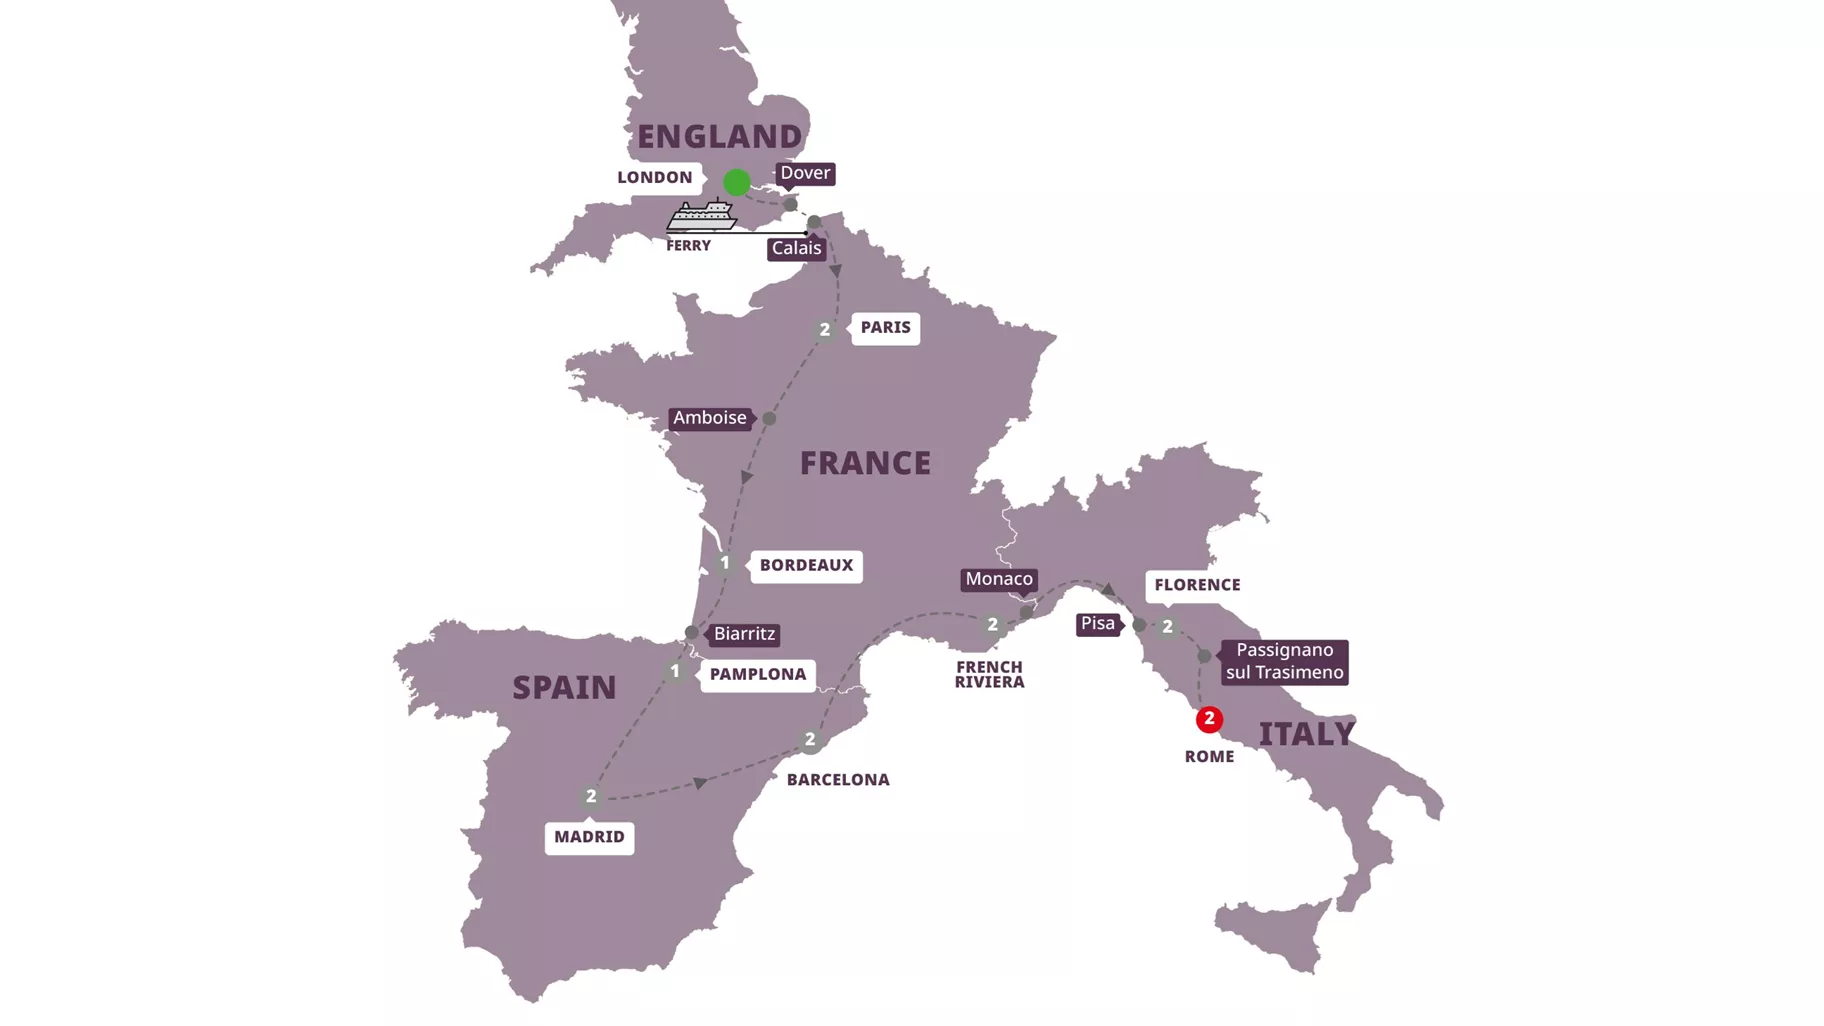 Enchanting Europe Guided Tour Map